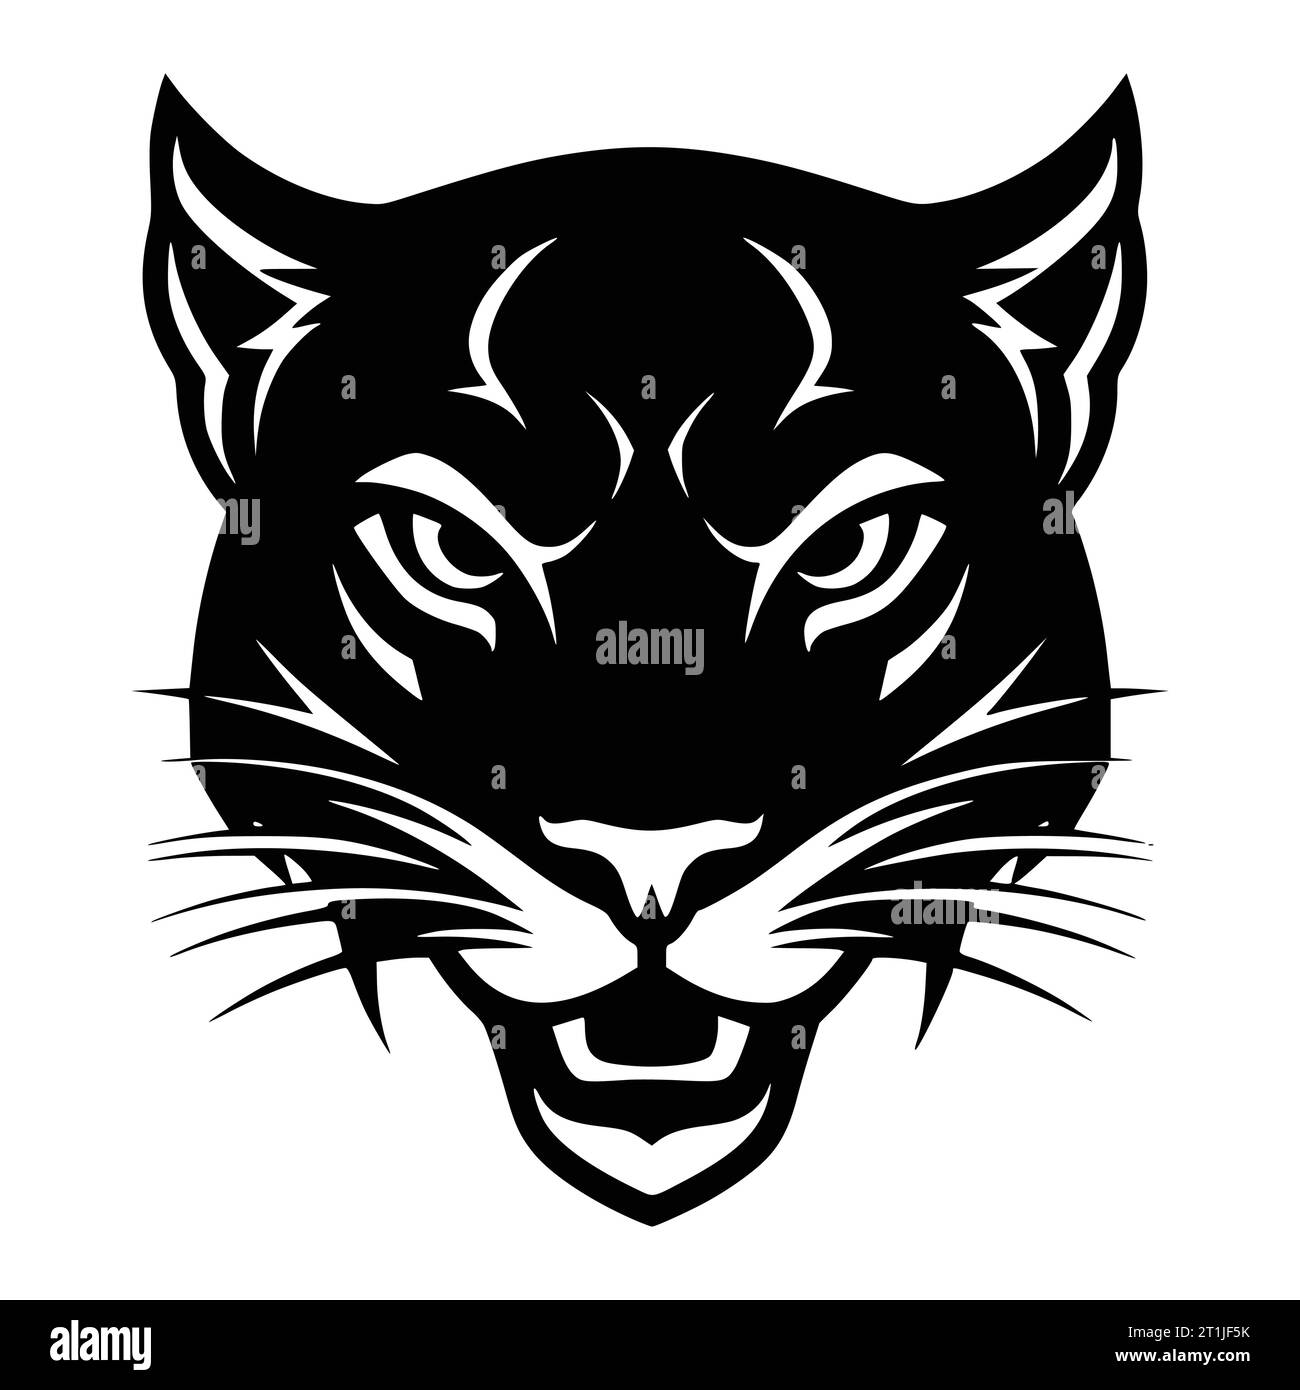 black panther wild animal head illustration for logo, mascot or symbol Stock Vector